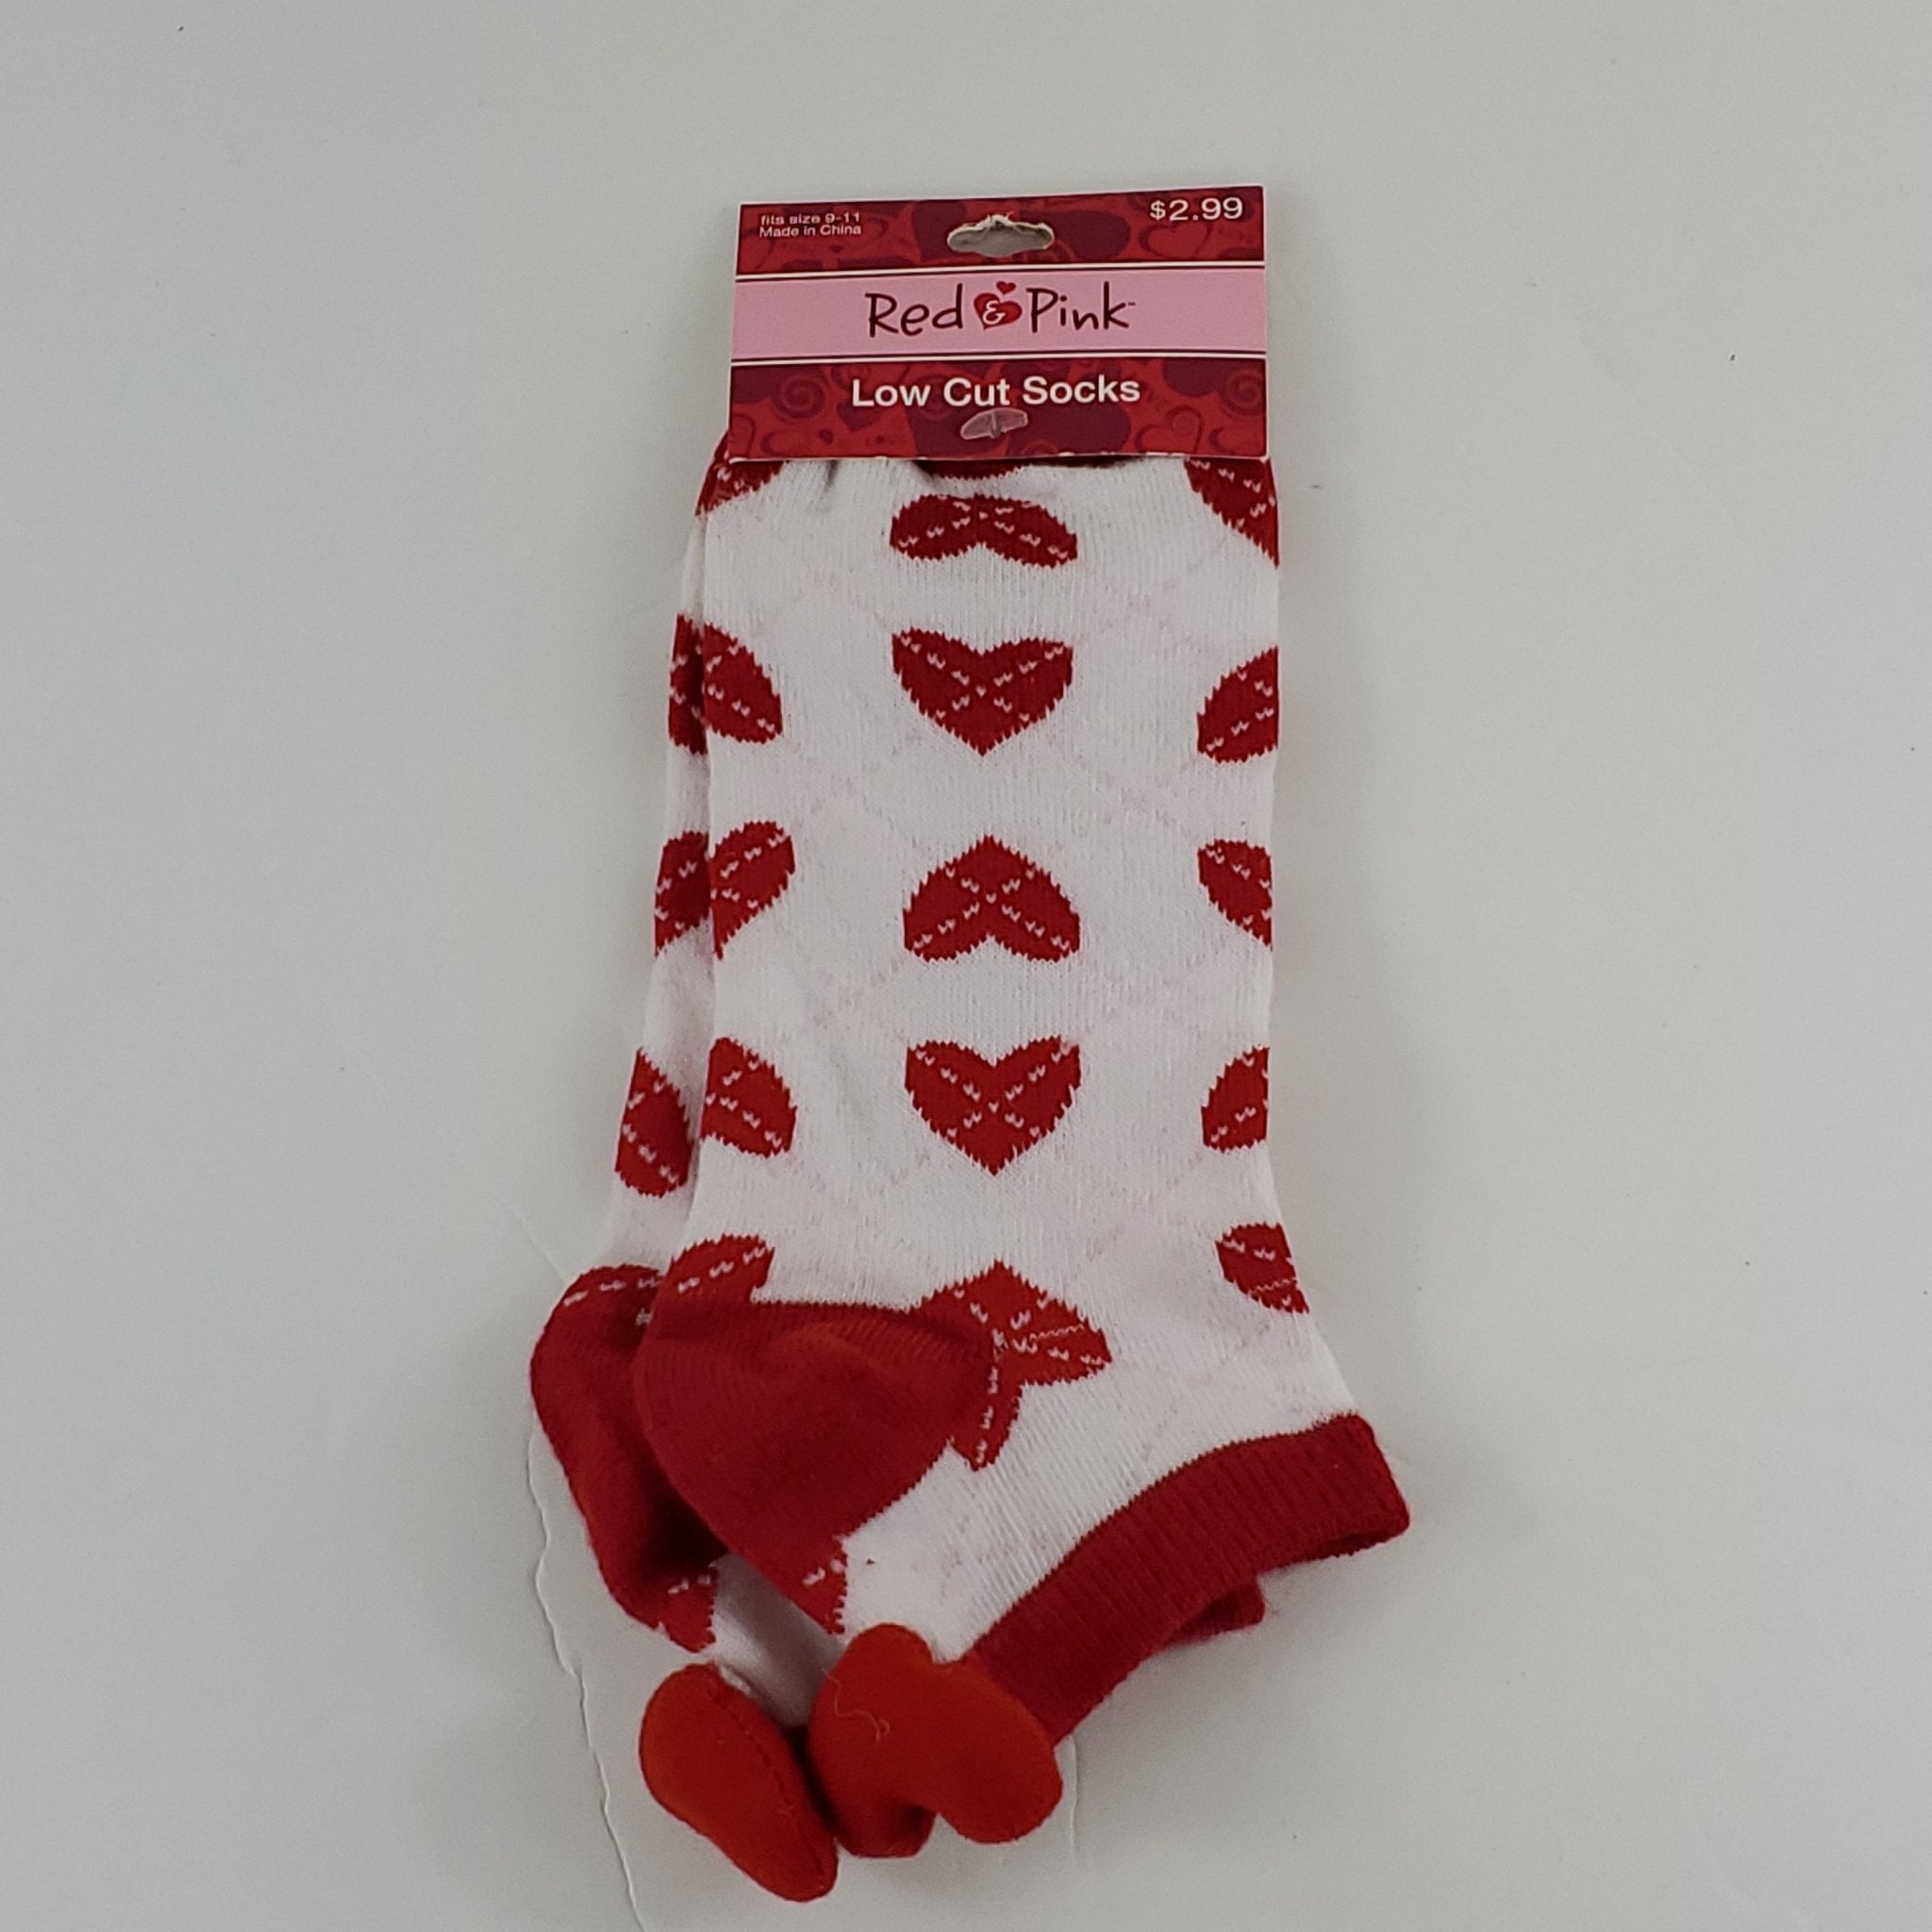 Red & Pink Low Cut Socks - Bargainwizz